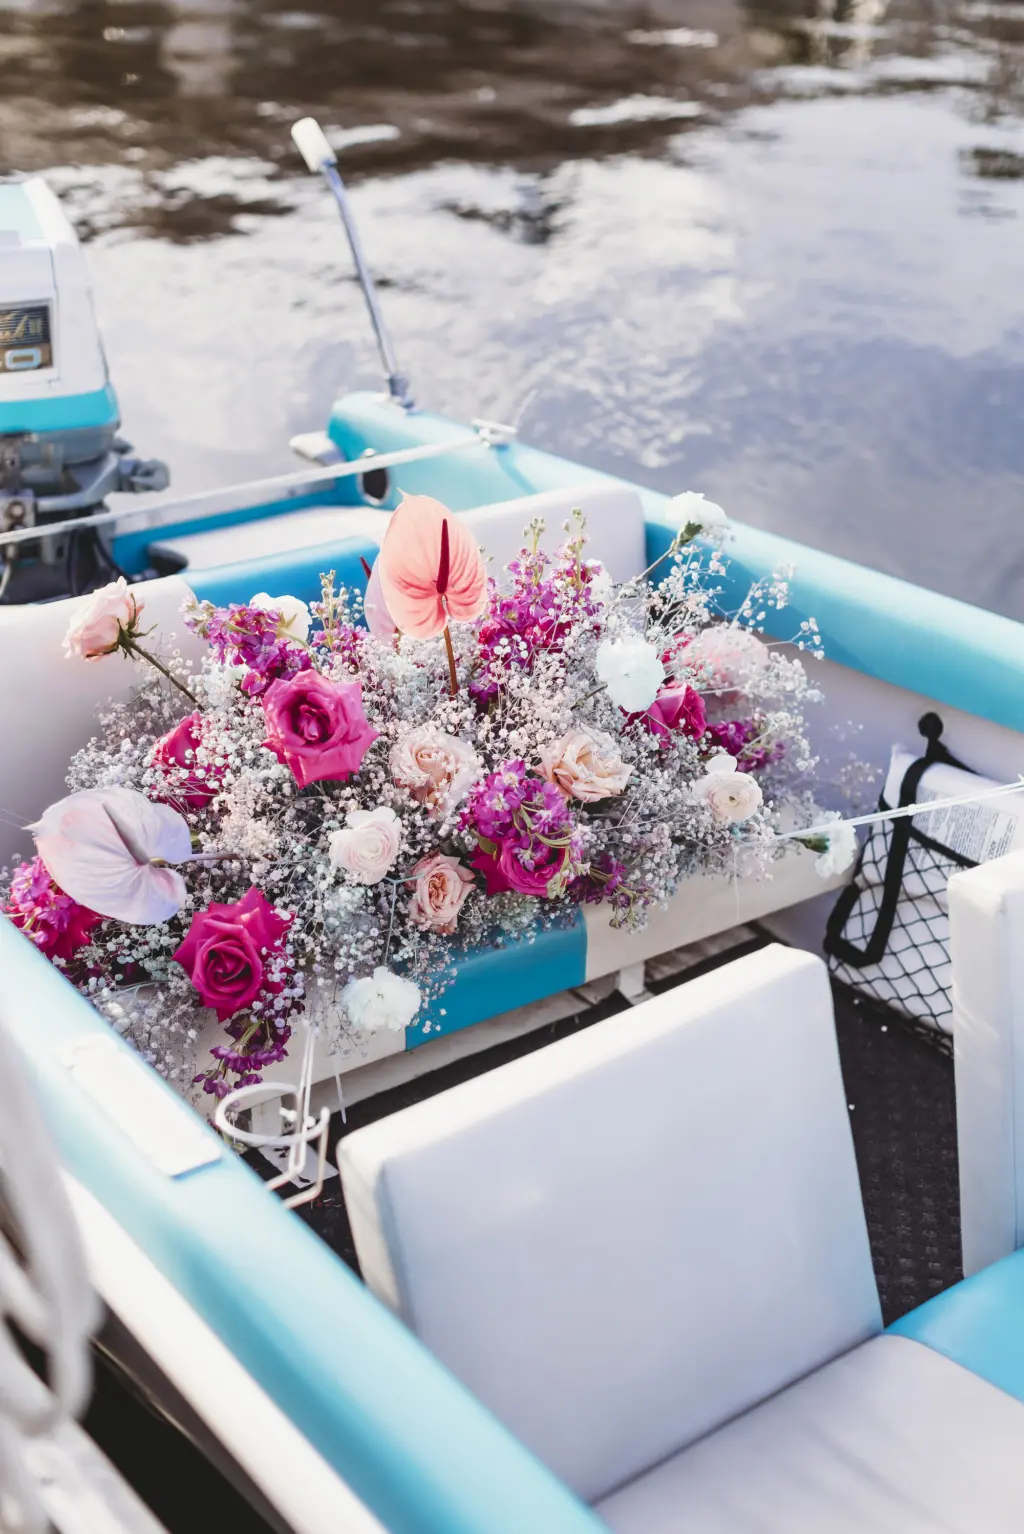 Retro Blue Boat Elopement Wedding with Bright Pink Florals and Baby's Breath Wedding Decor Inspiration | Tampa Wedding Planner Wilder Mind Events